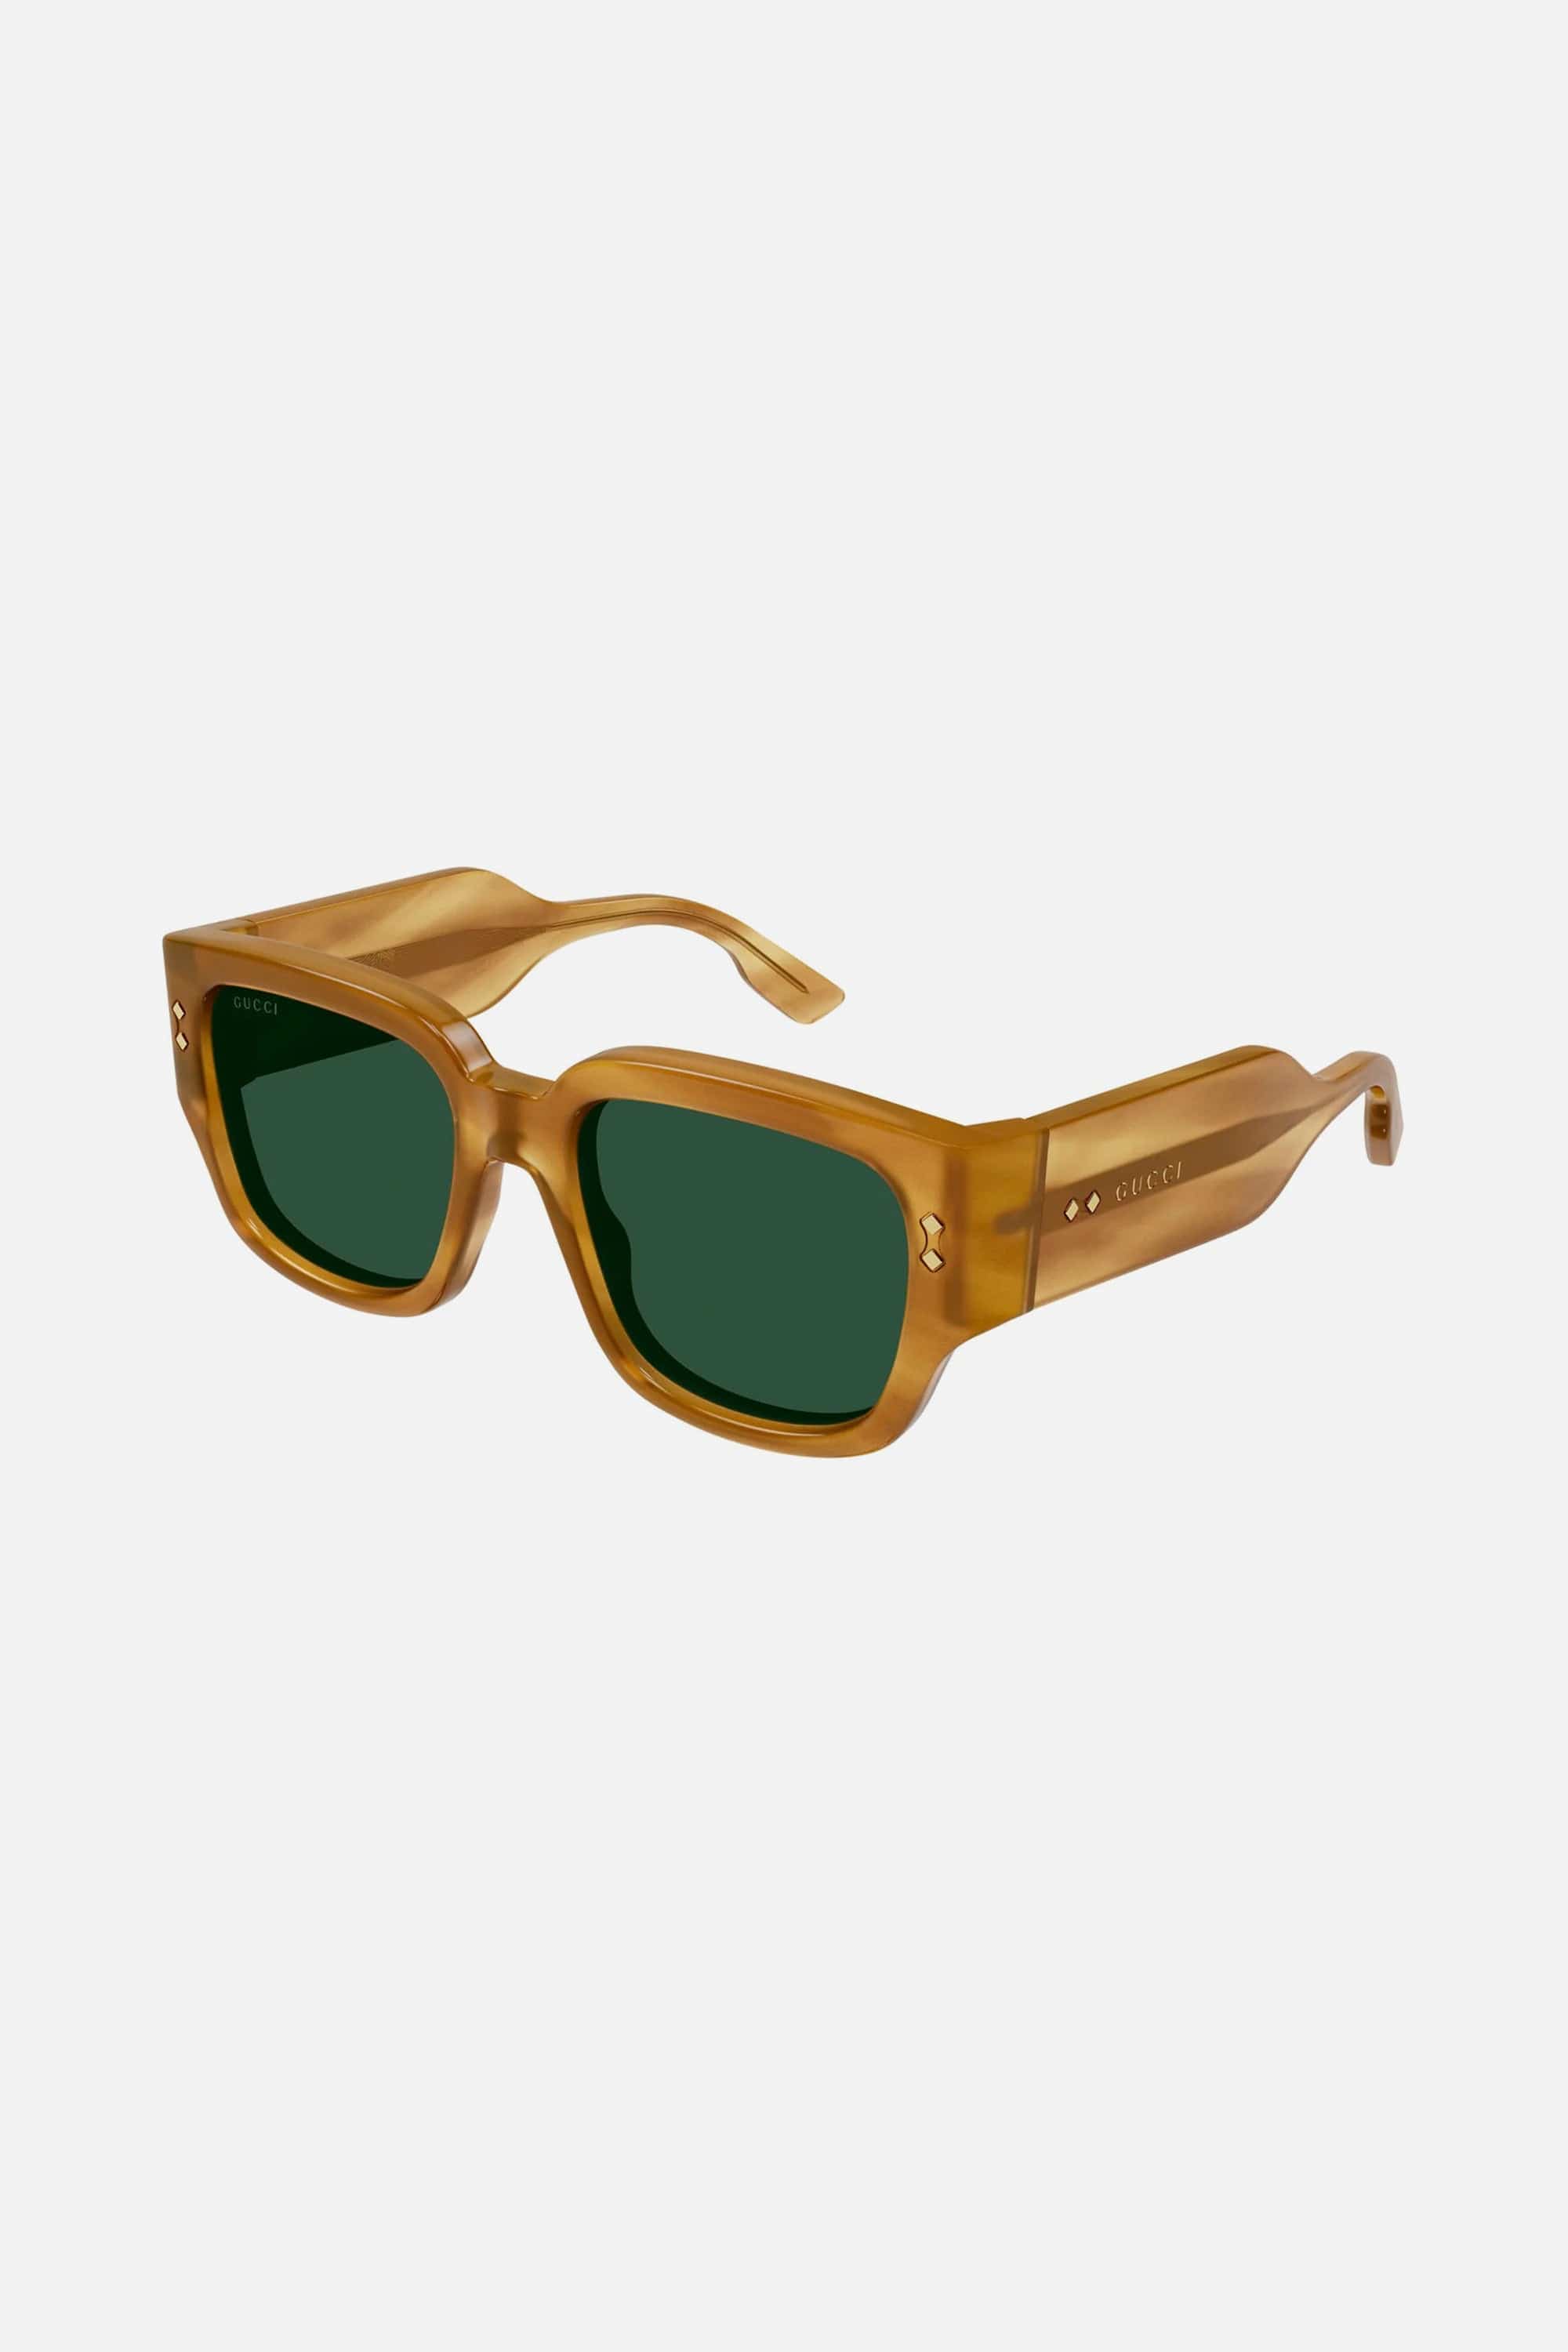 Gucci flat top cognac squared sunglasses - Eyewear Club